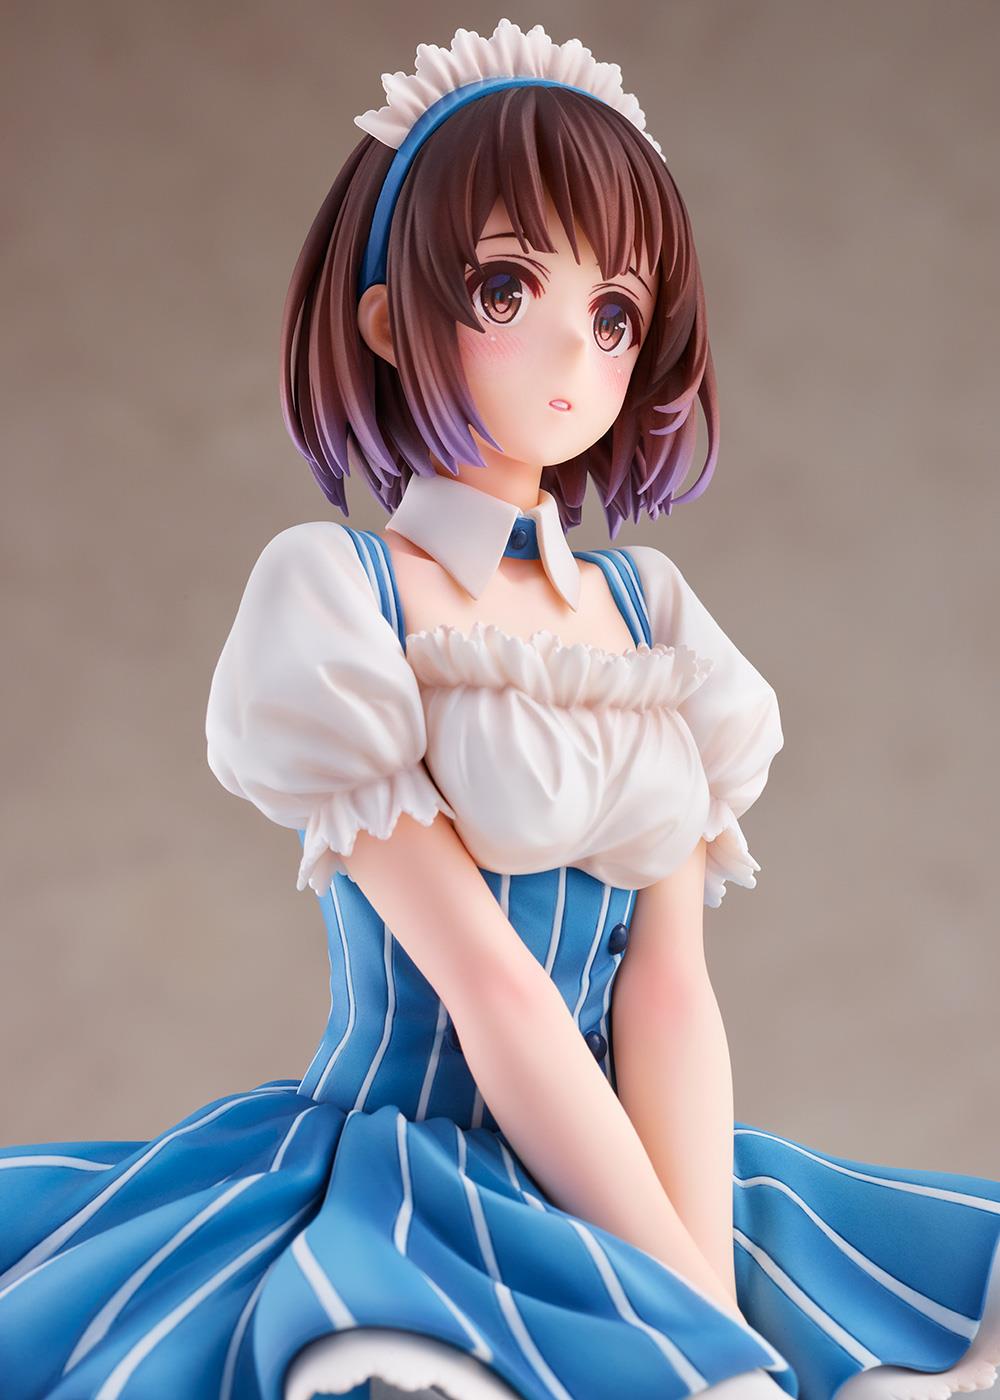 Saekano: Megumi Kato Maid Ver. 1/7 Scale Figurine